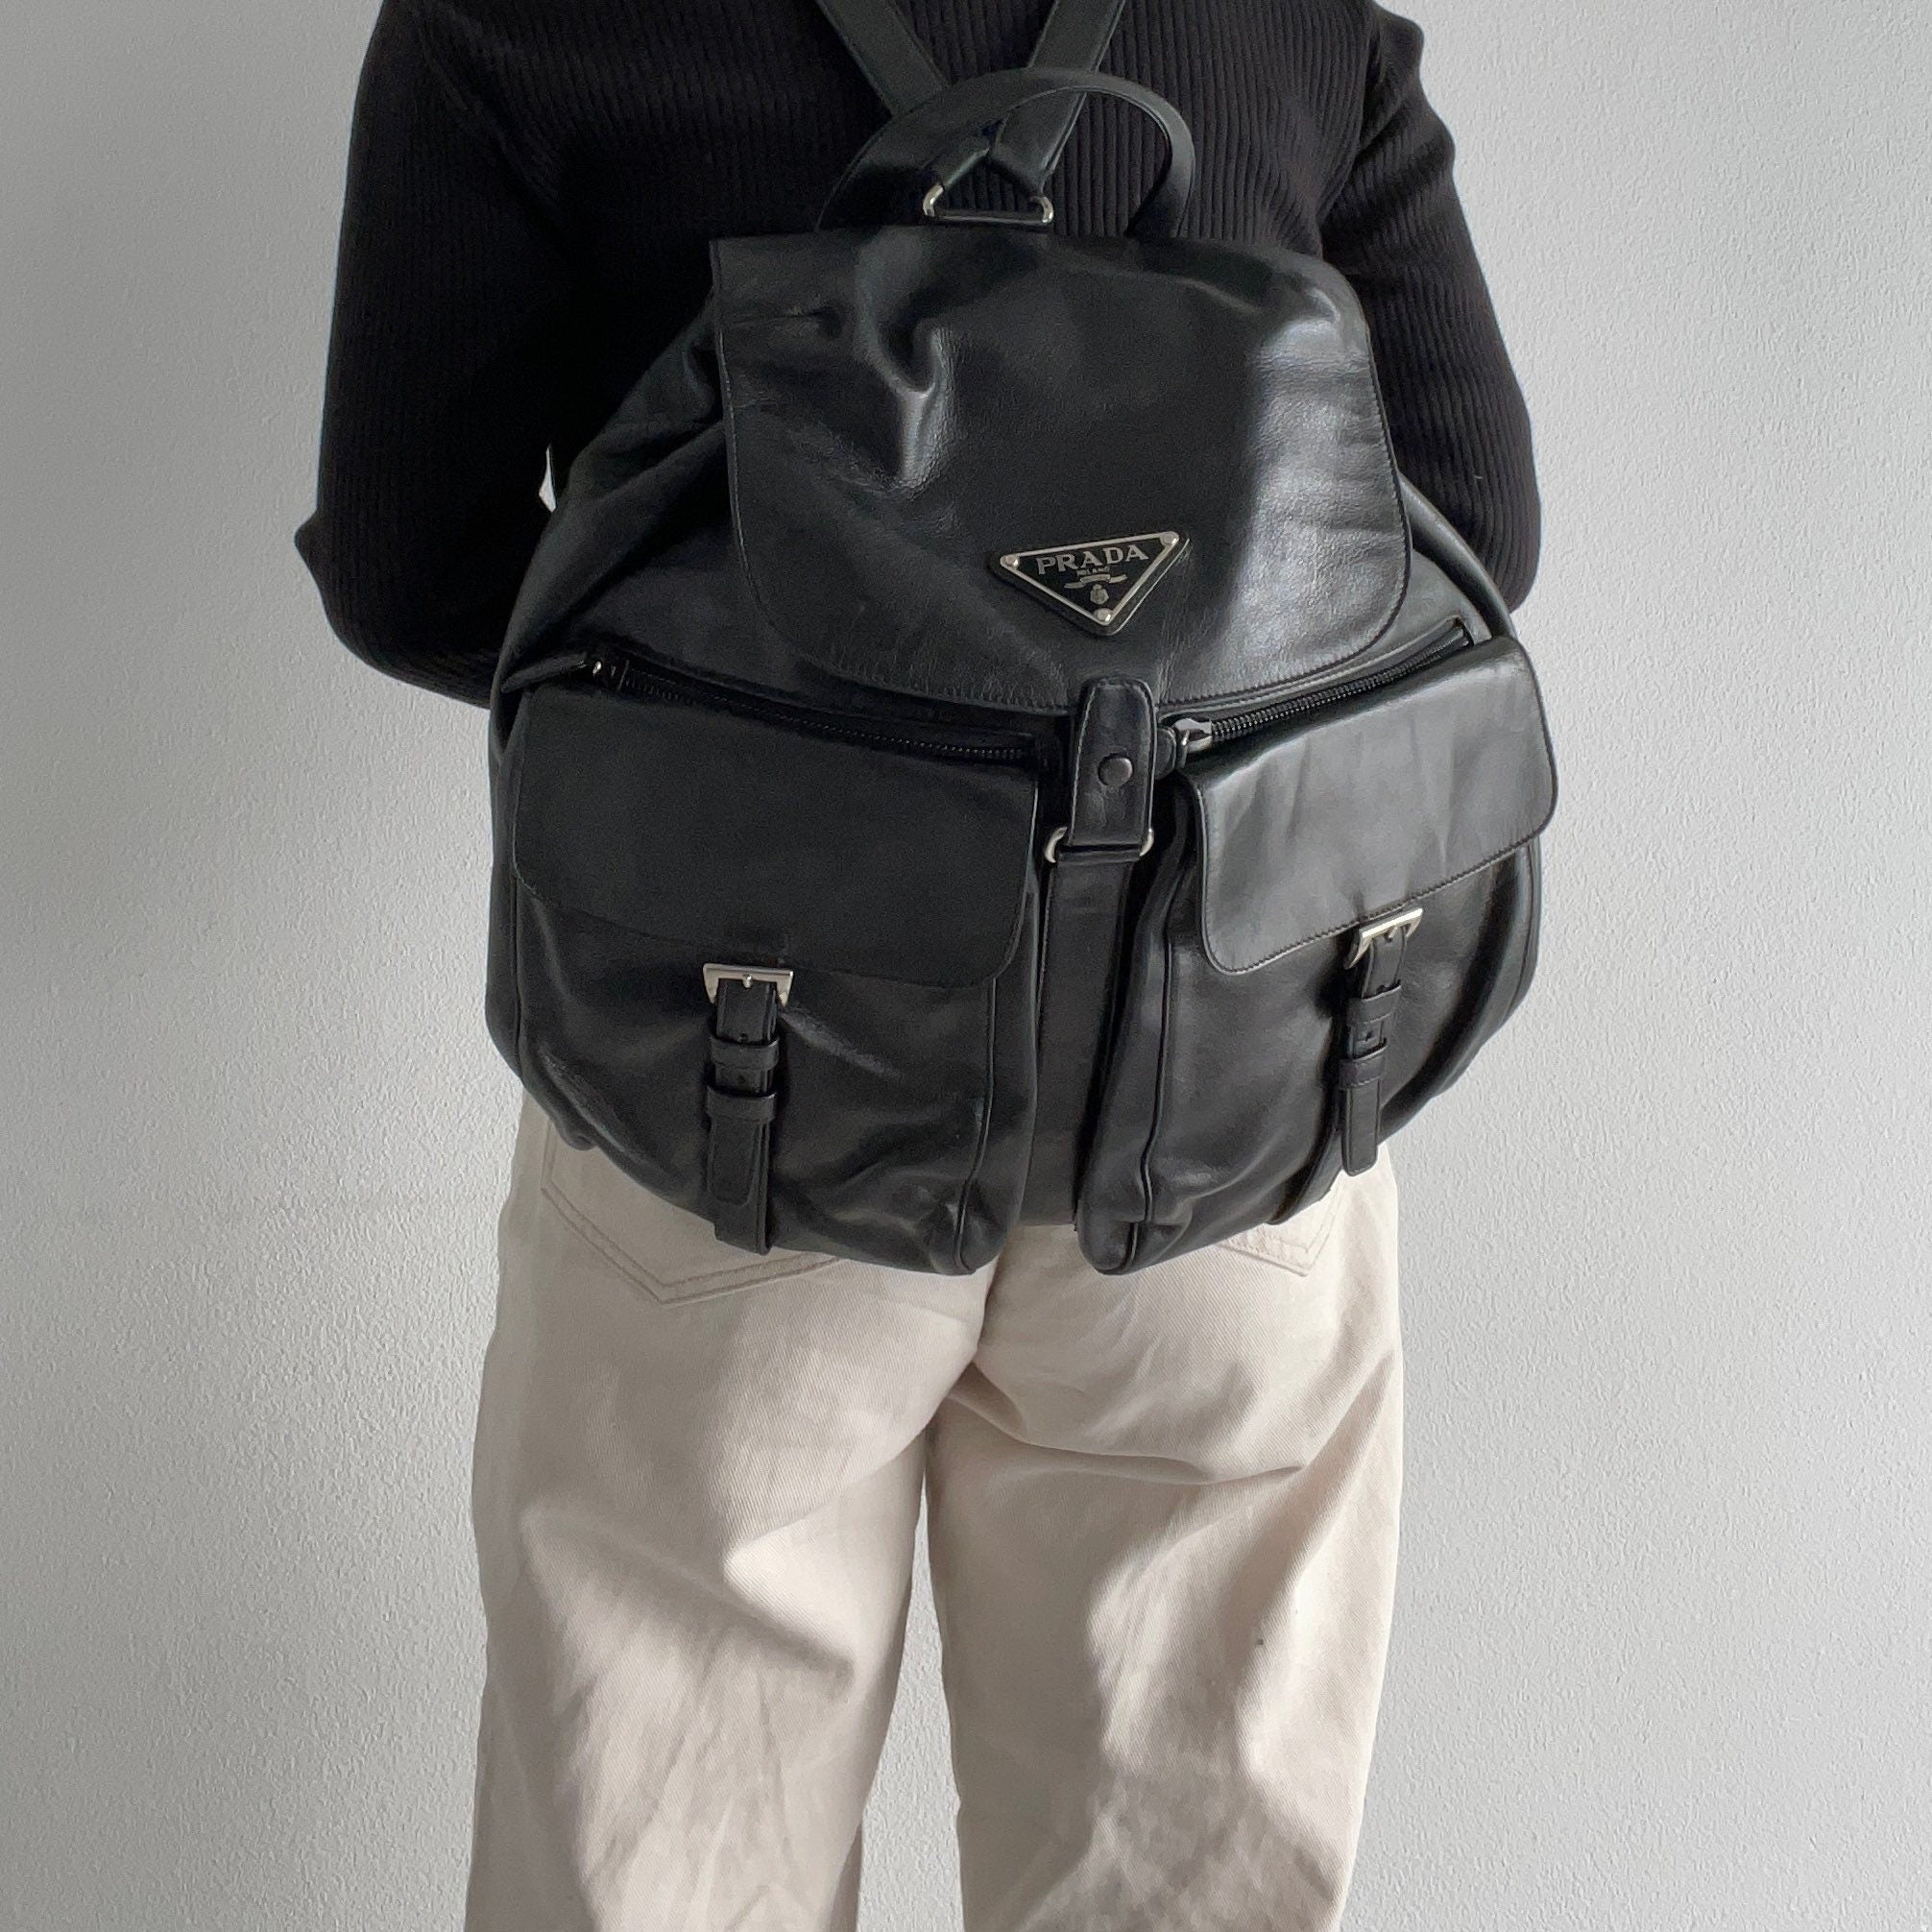 PRADA Backpack Bag Leather Black Logo Purse Authentic Unisex